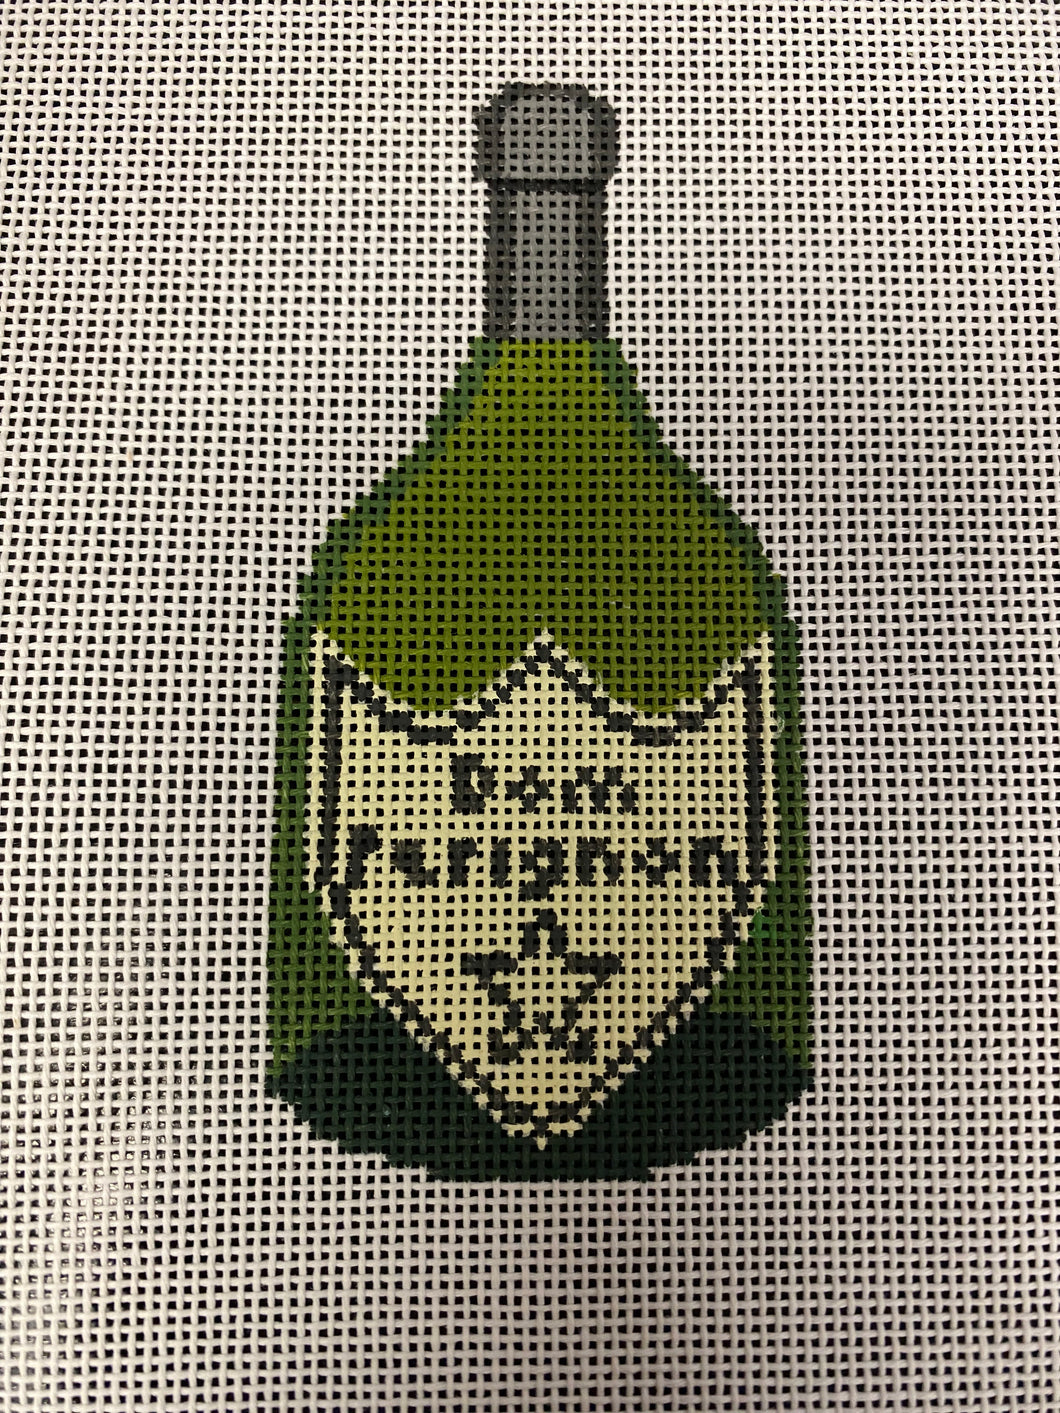 Dom Perignon Needlepoint Ornament